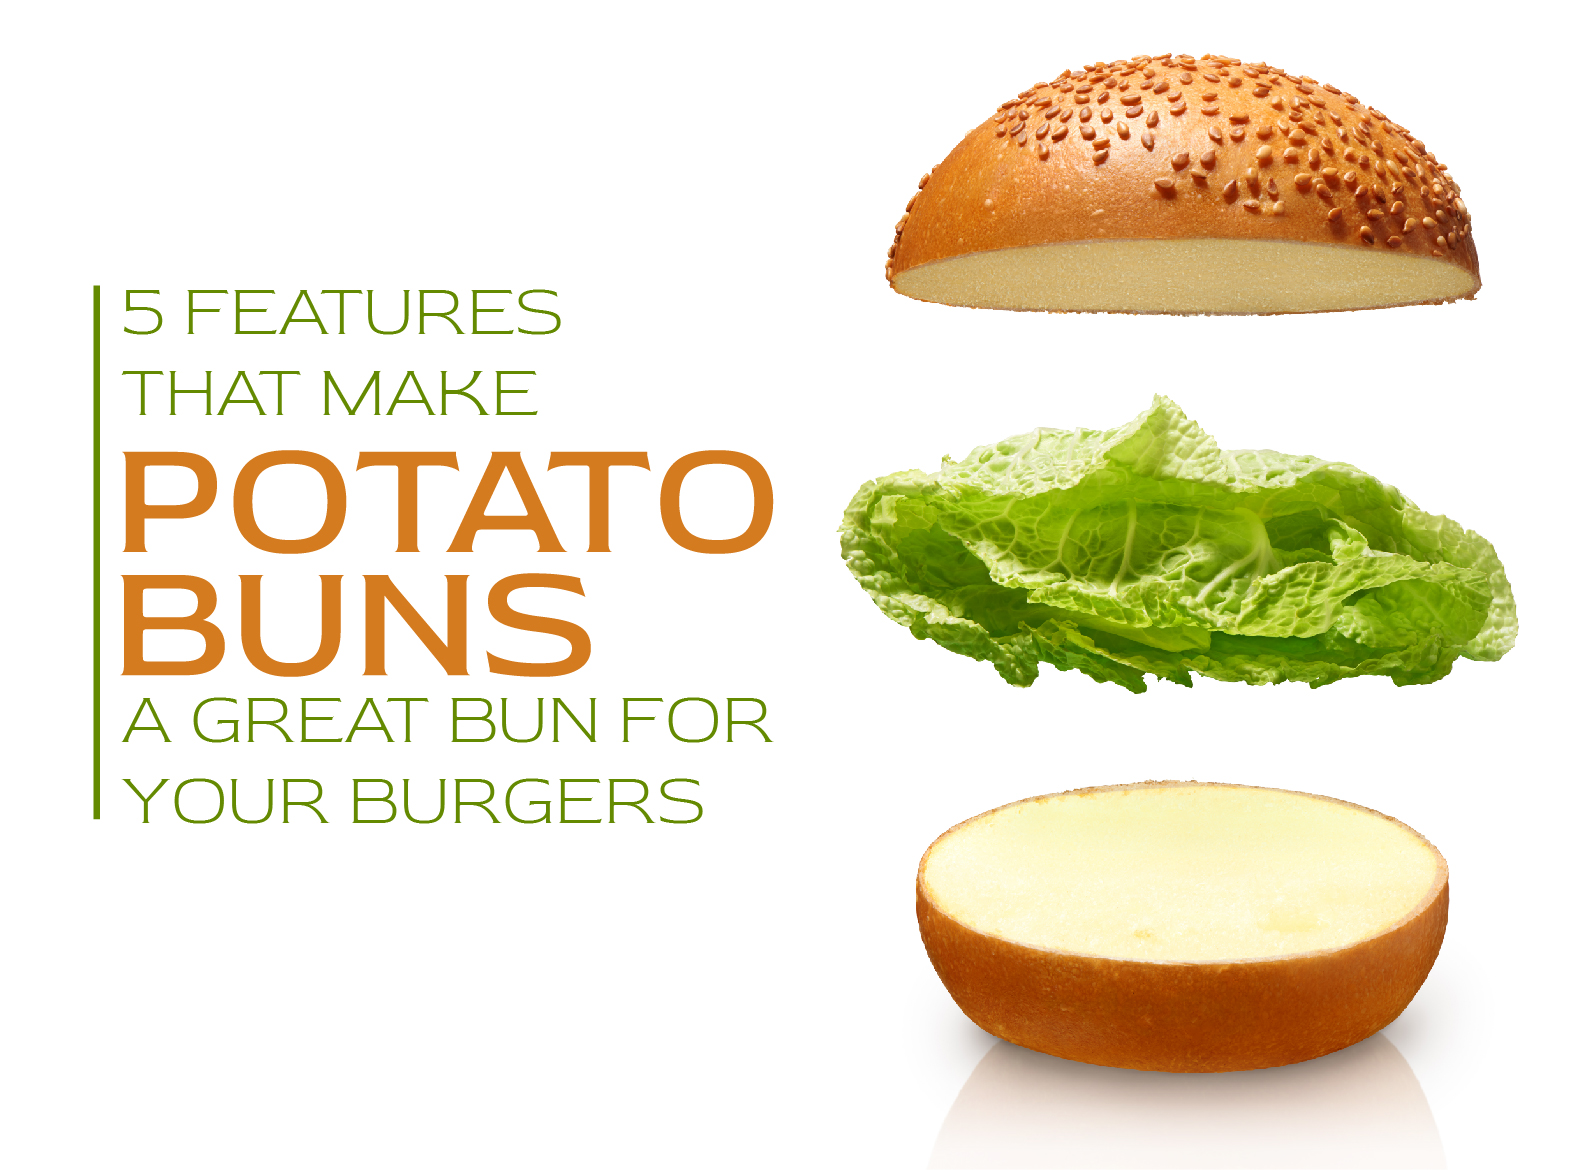 5 Features that make Potato Buns a great bun for your Burgers